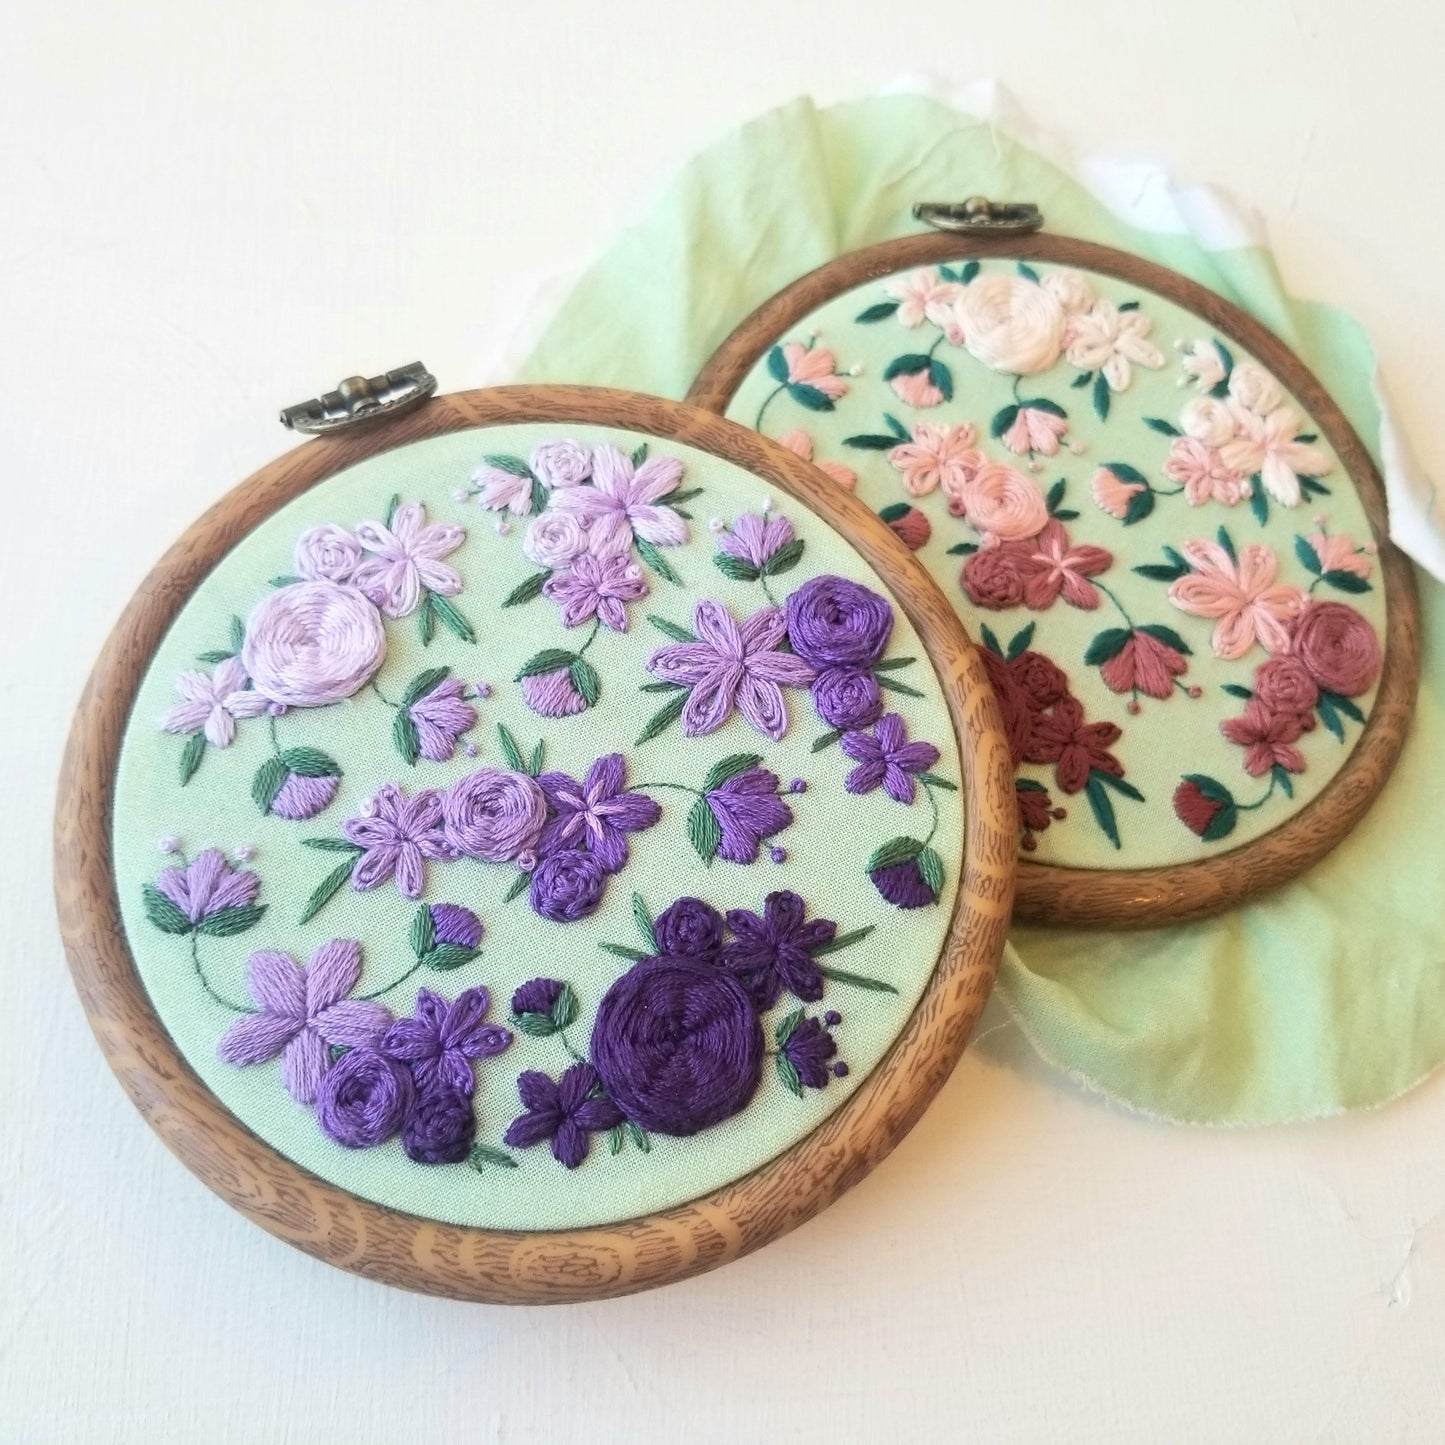 Blushing Blooms Embroidery Pattern (PDF)